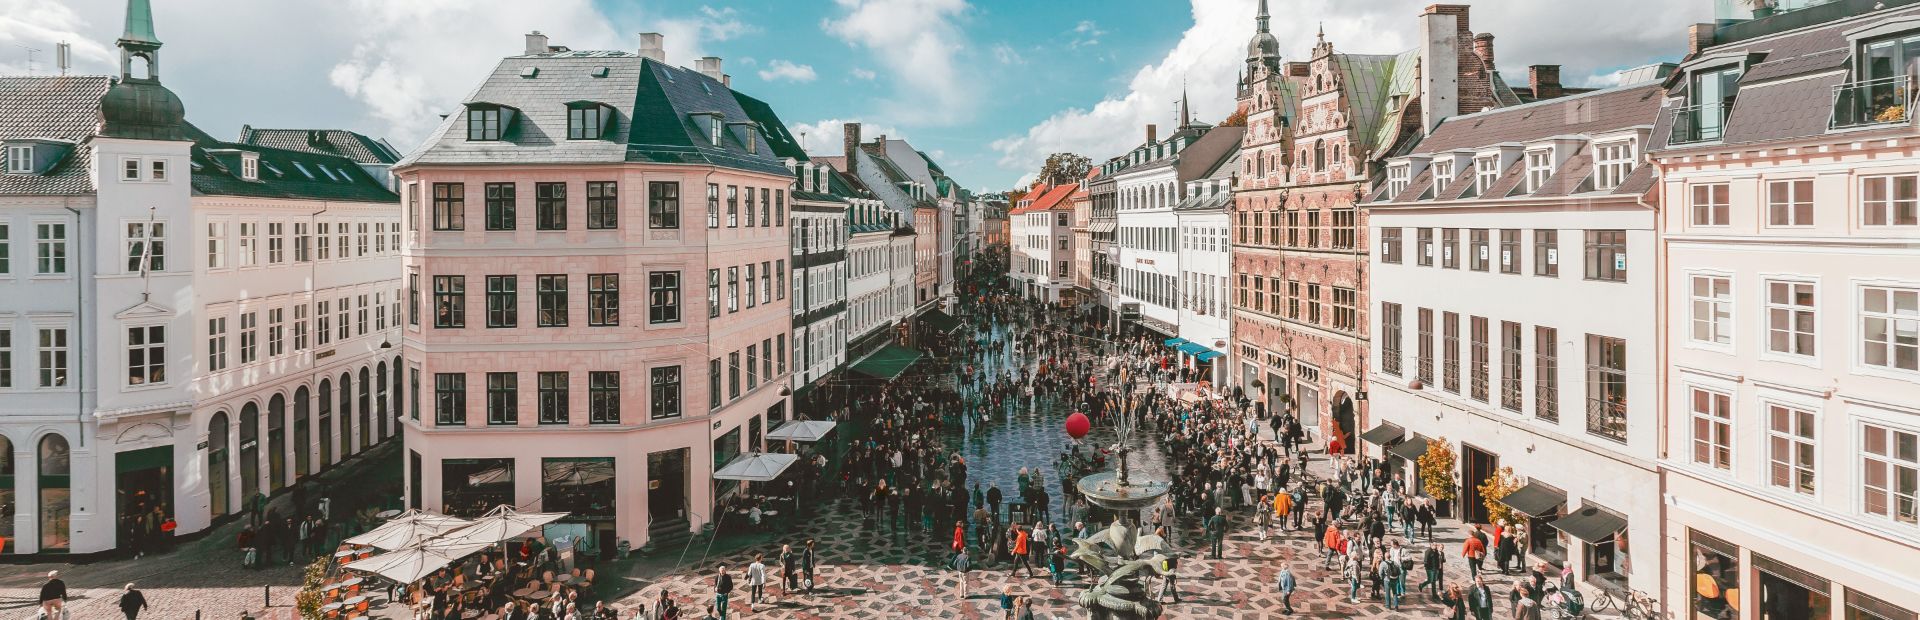 Telia’s data contribute to better visitor experiences in Denmark 